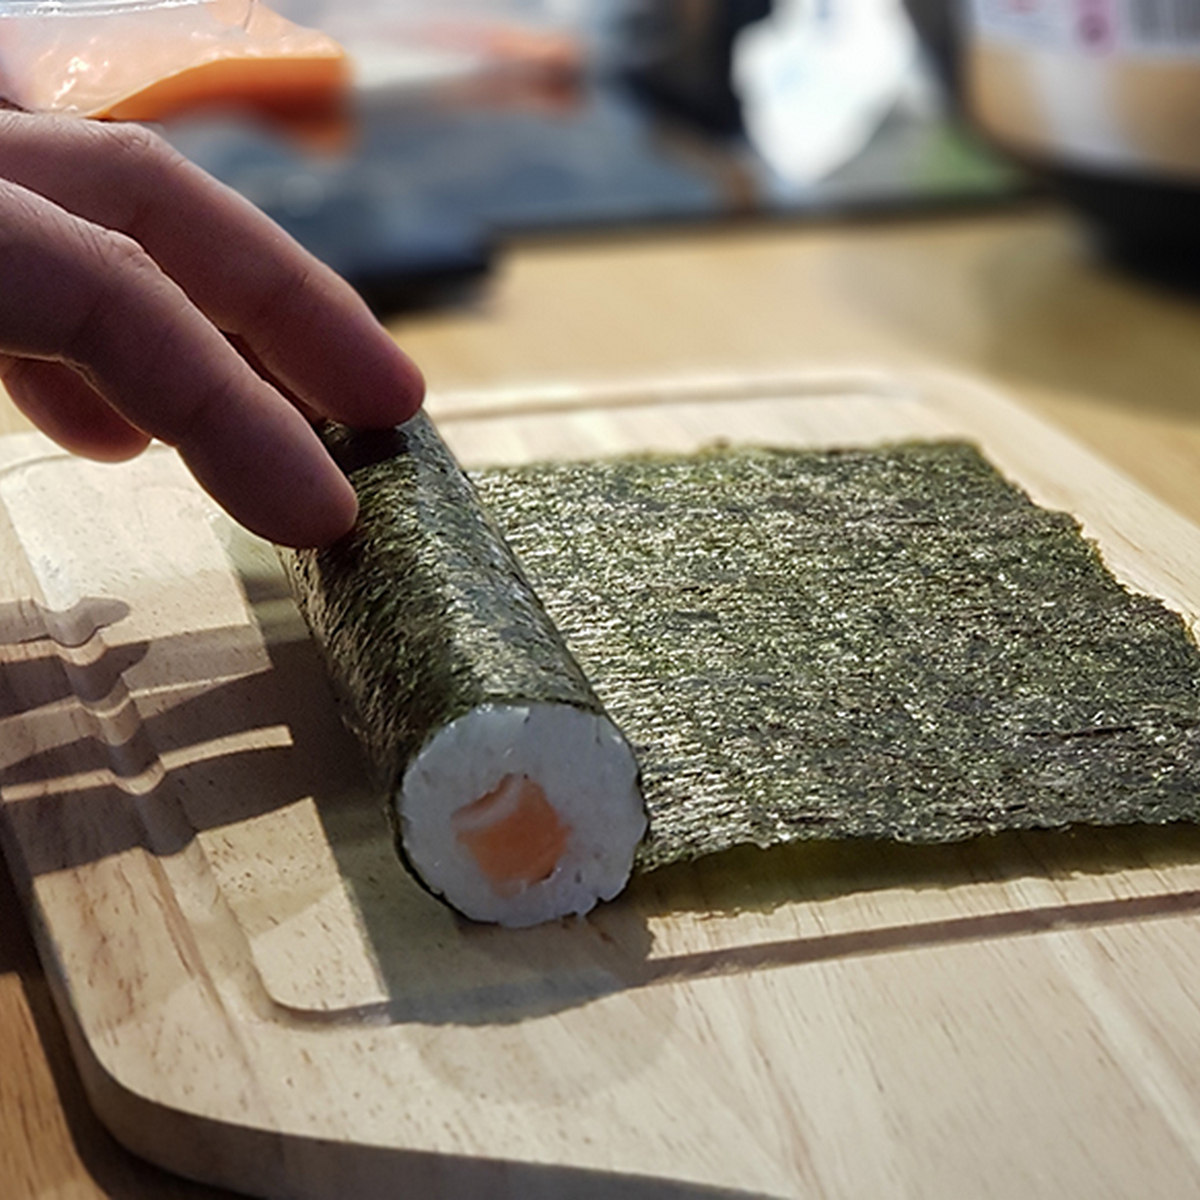 cookut coffret-sushi-maki-faciles ustensile de cuisine une idee cadeau chez ugo et lea (11)